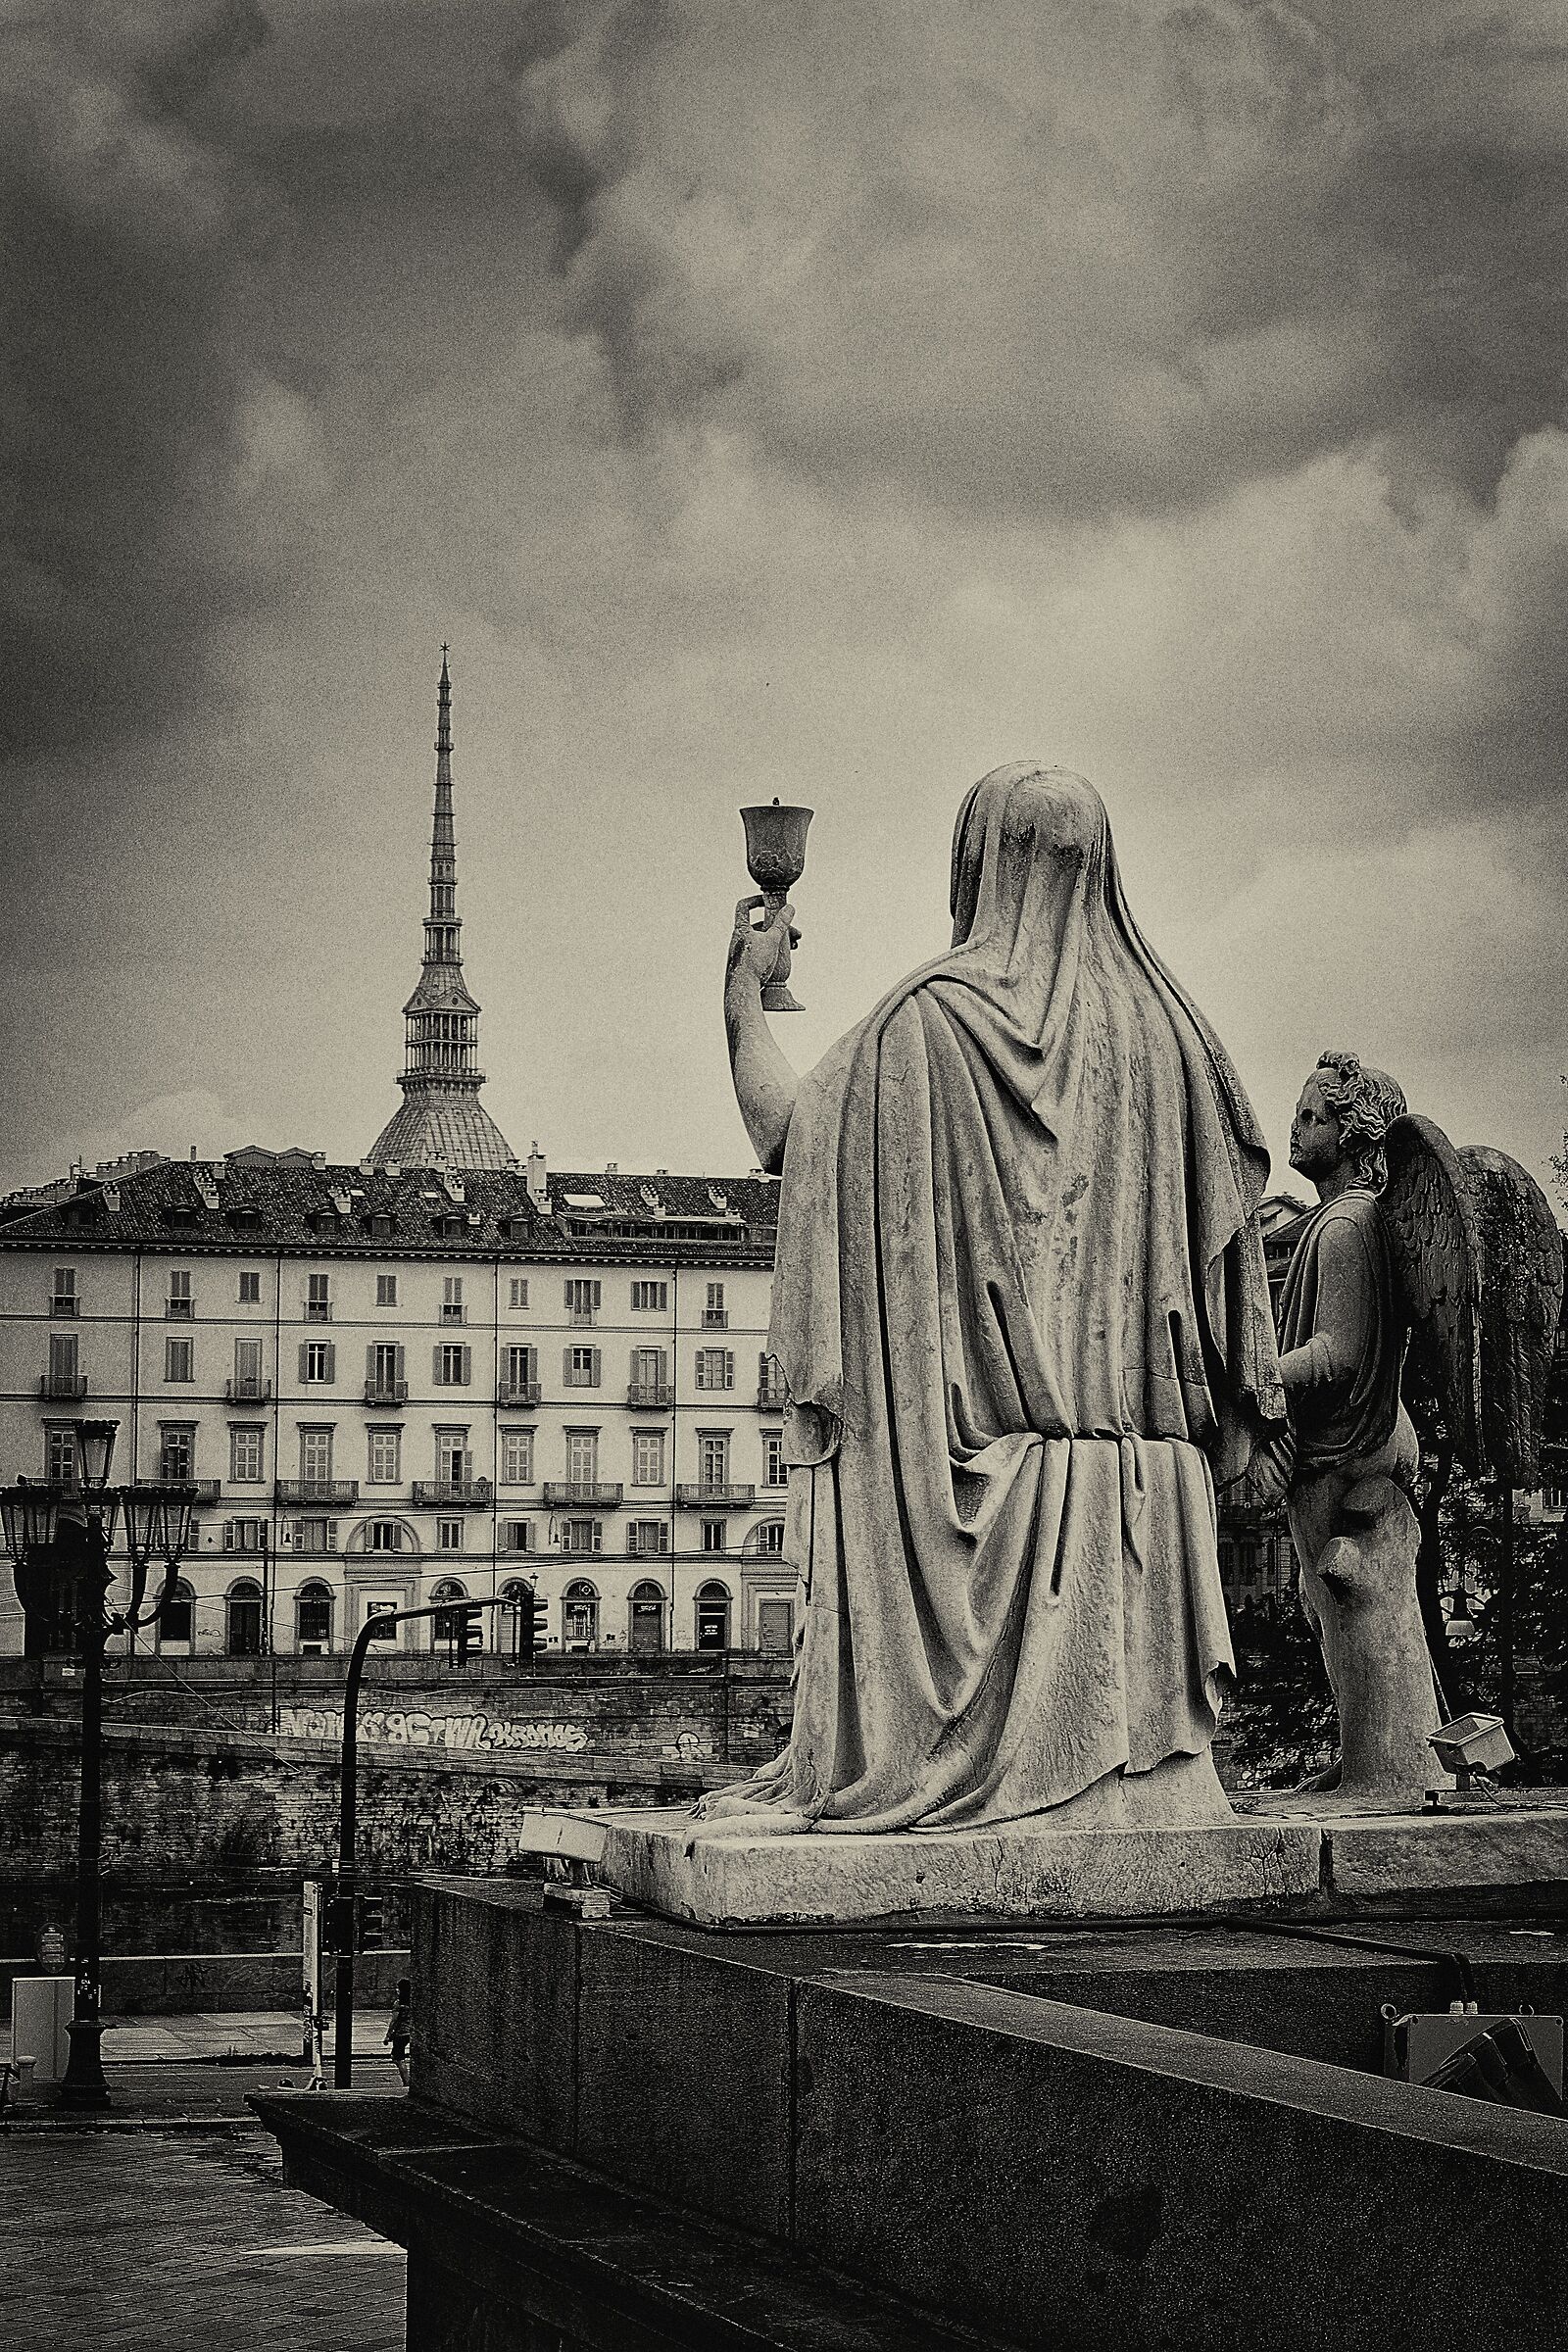 Turin and its symbols - I...